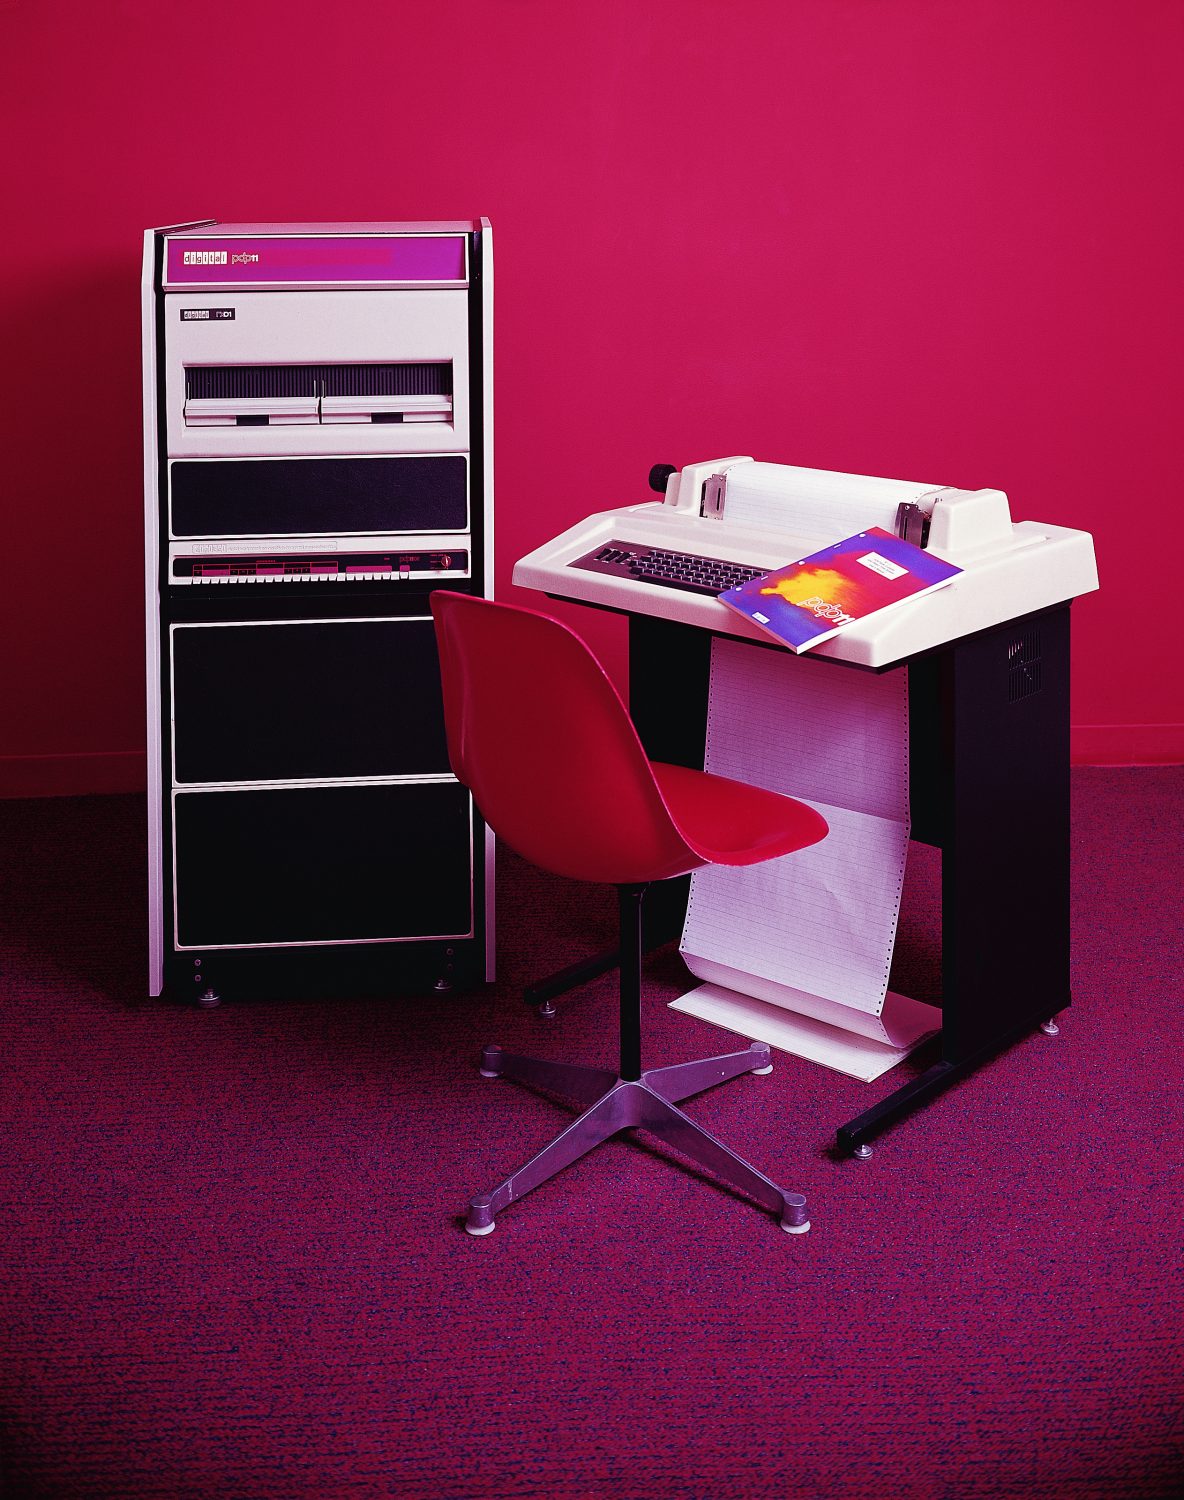 A photo of Digital Equipment Corporation's Programmed Data Processor-11 (PDP-11) taken in 1972.